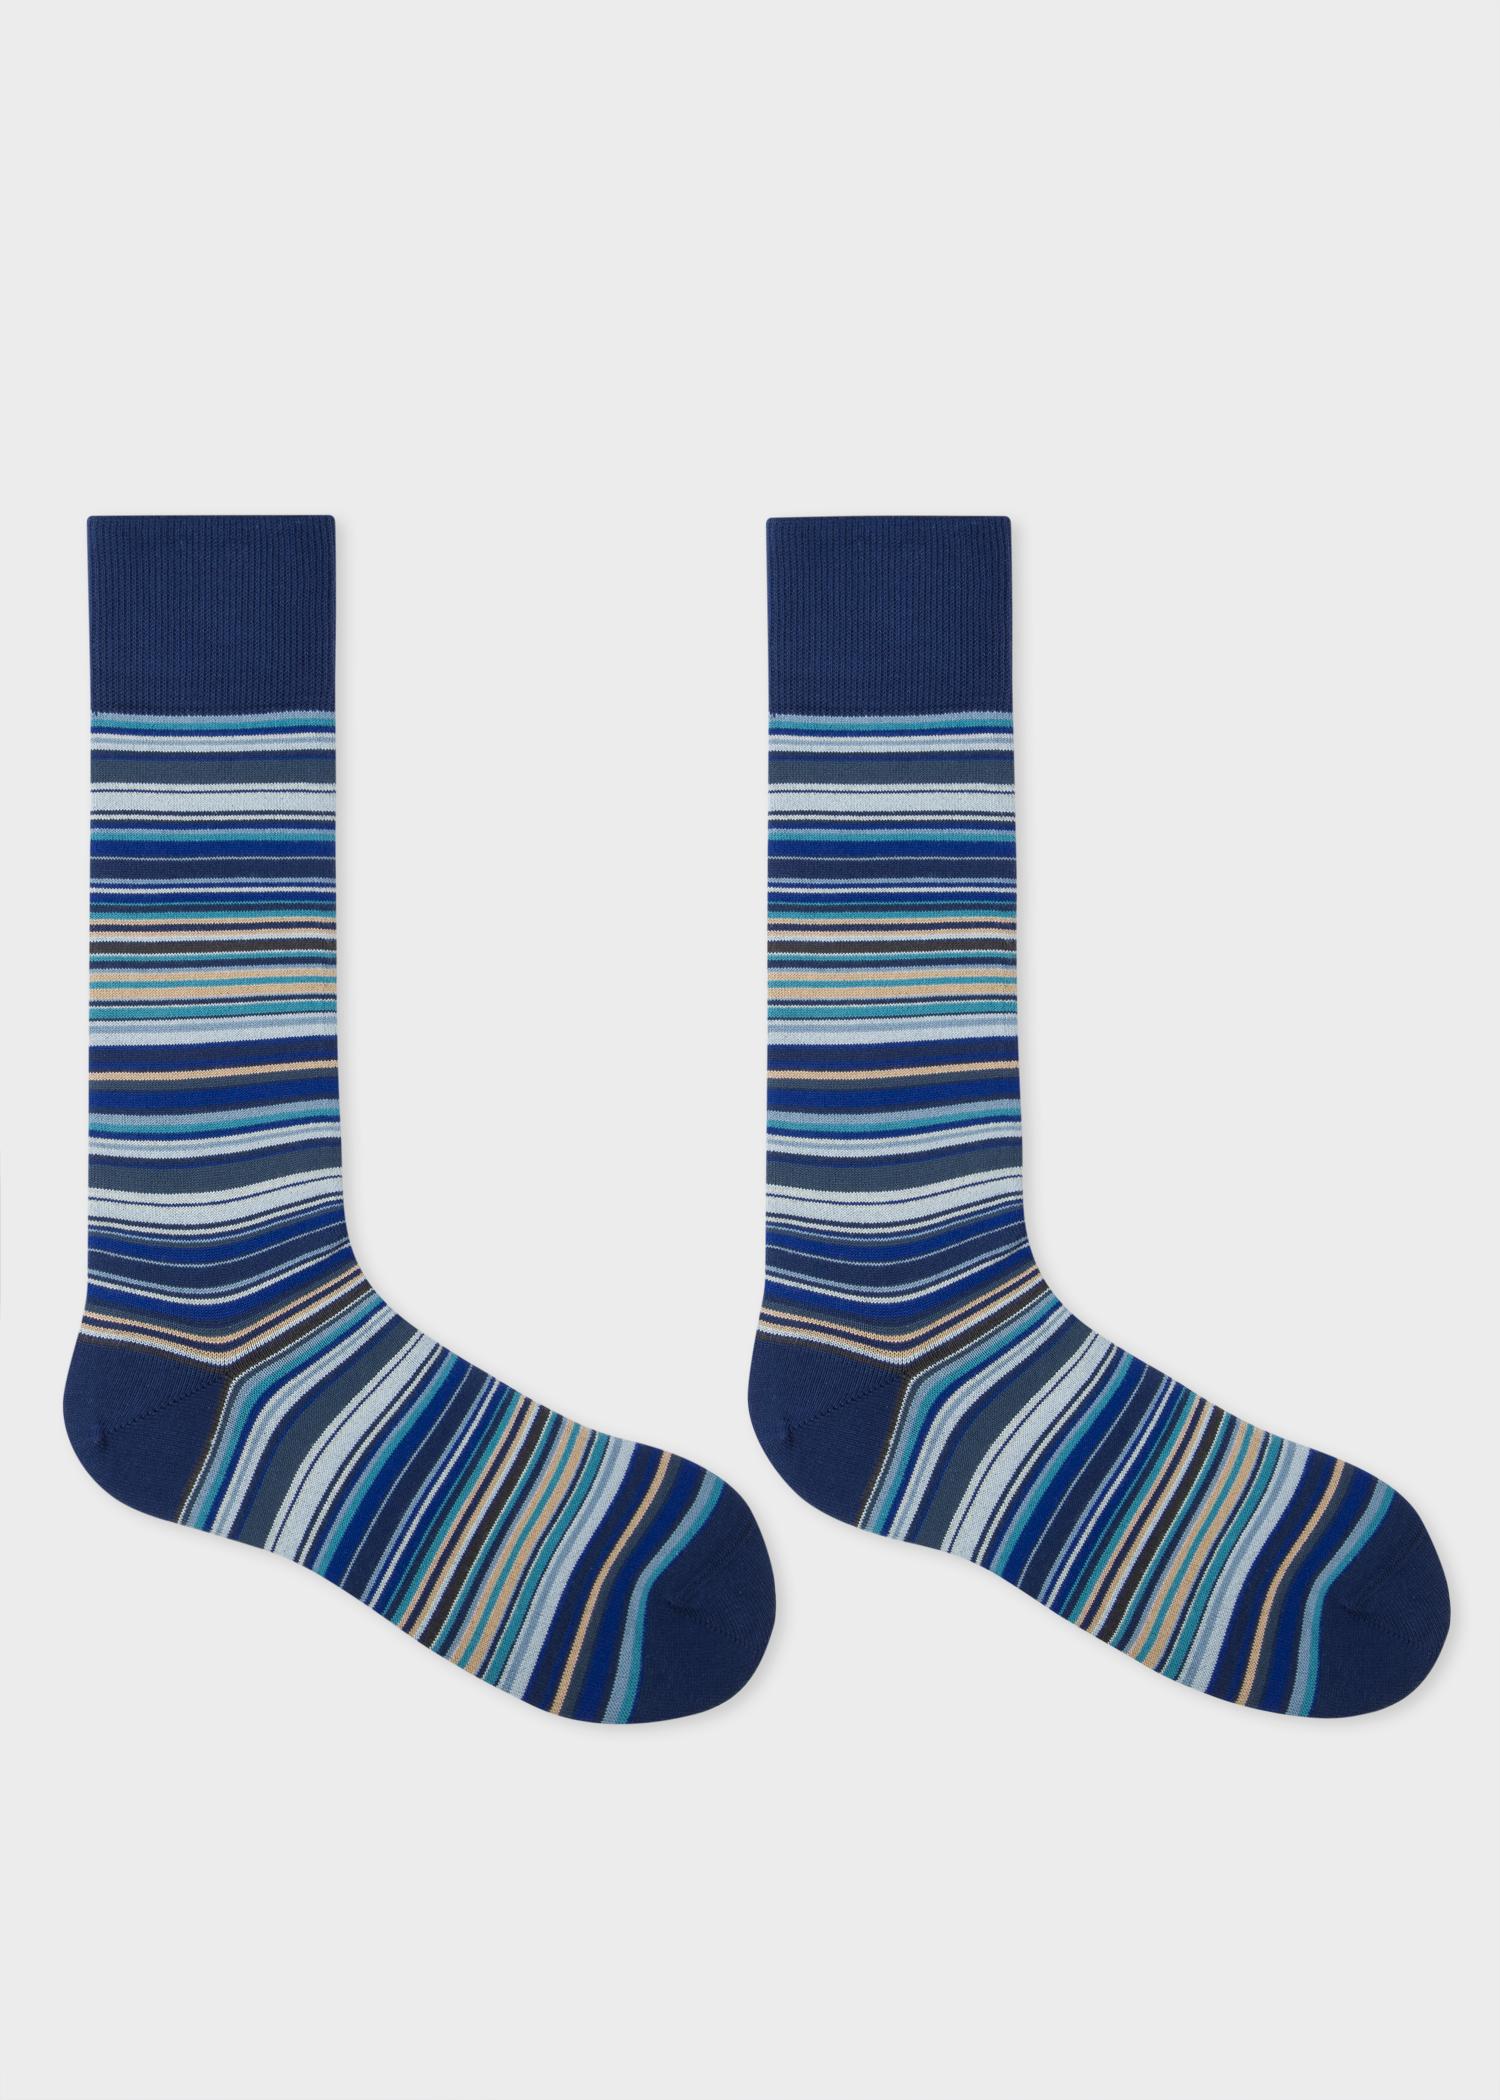 Paul Smith Cotton Sky Blue Signature Stripe Socks for Men - Lyst